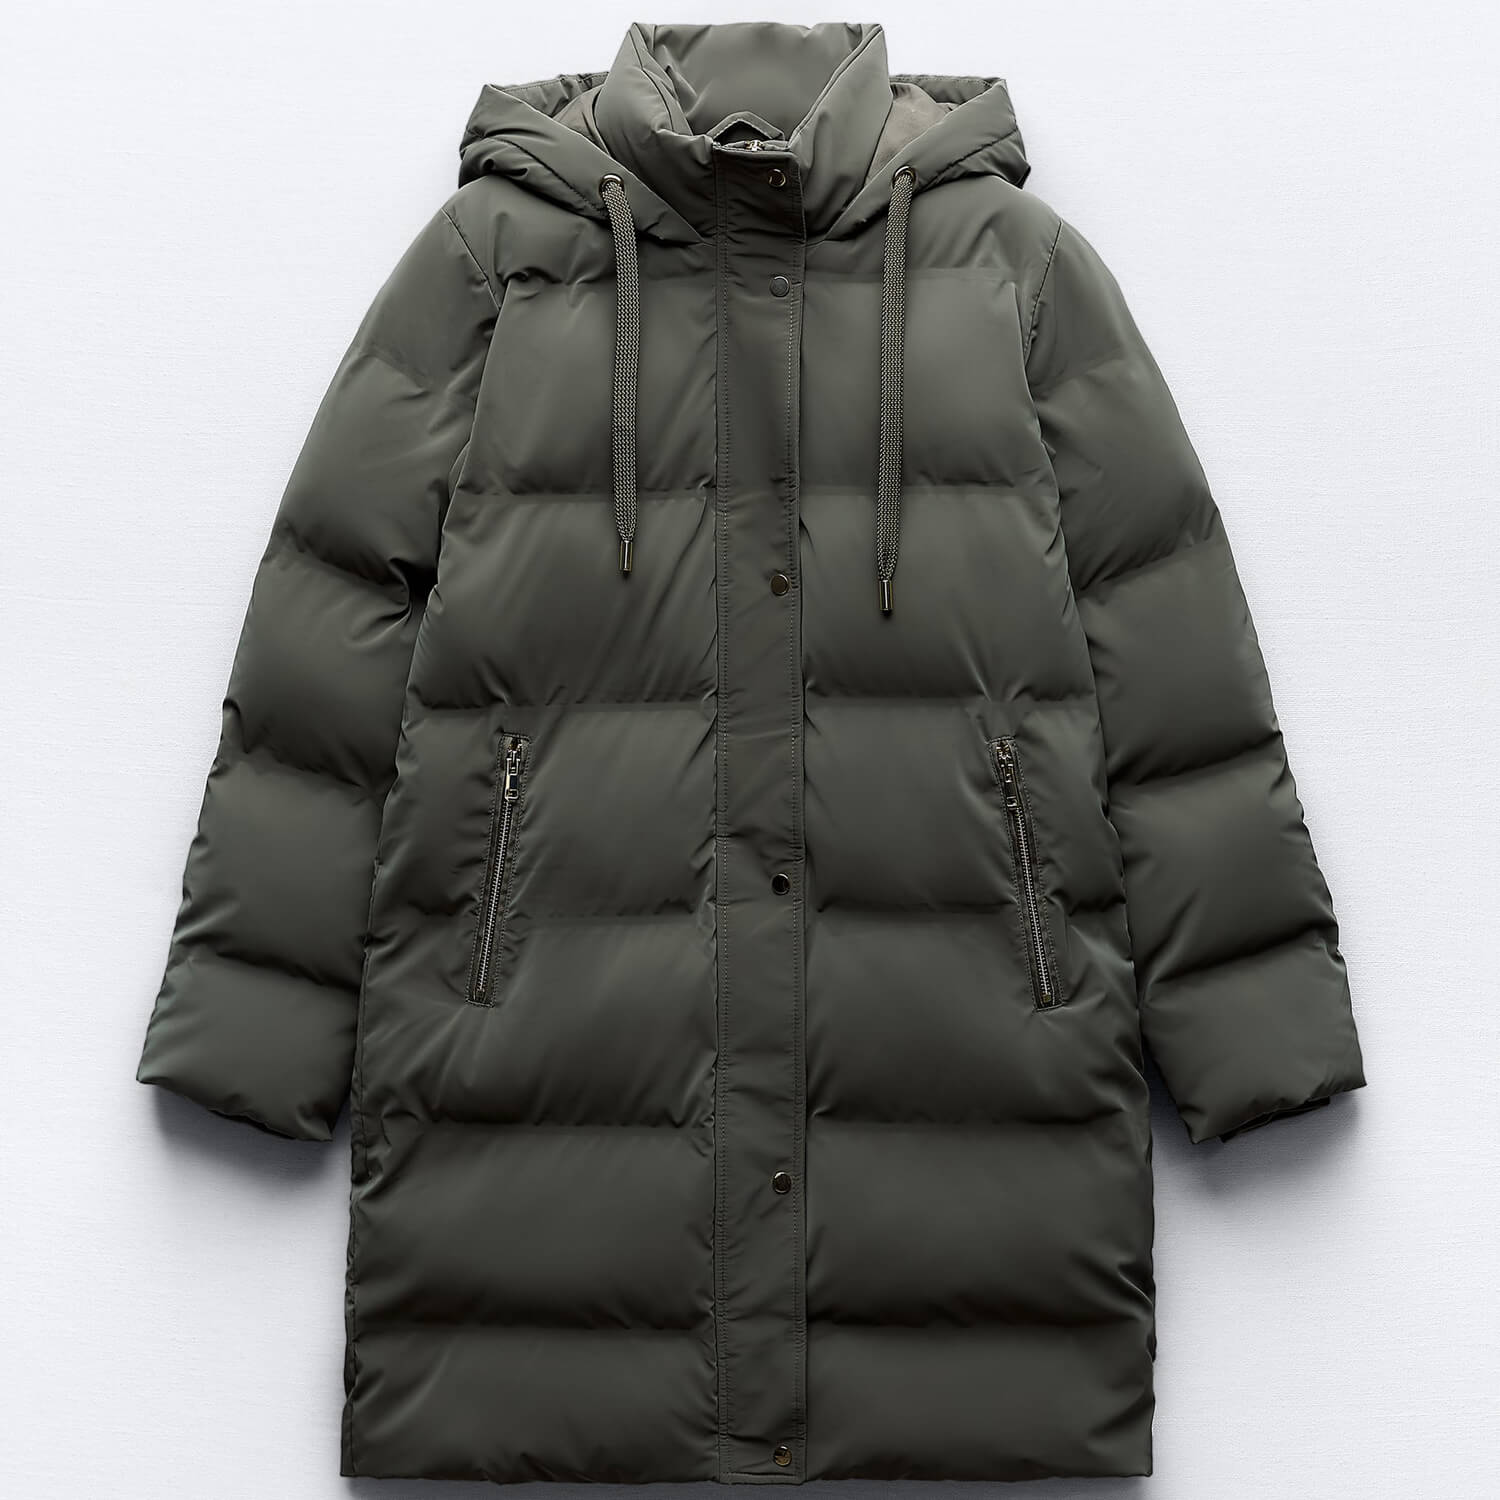 Куртка-анорак Zara Hooded With Wind Protection, хаки толстовка mexx средней длины капюшон манжеты карманы размер 146 152 синий